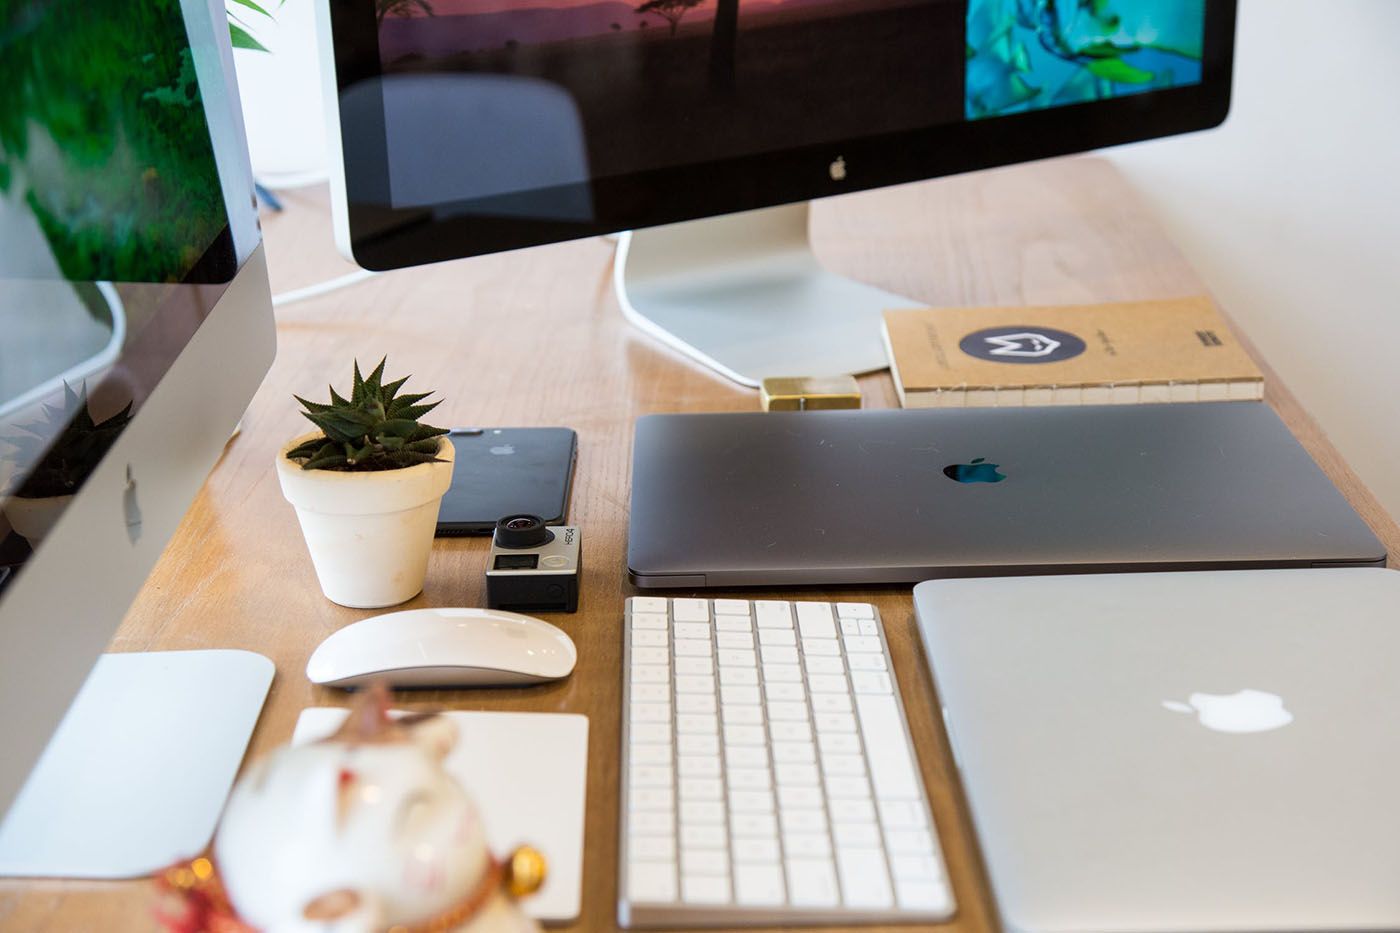 Mac display, iMac, and MacBooks on a desk